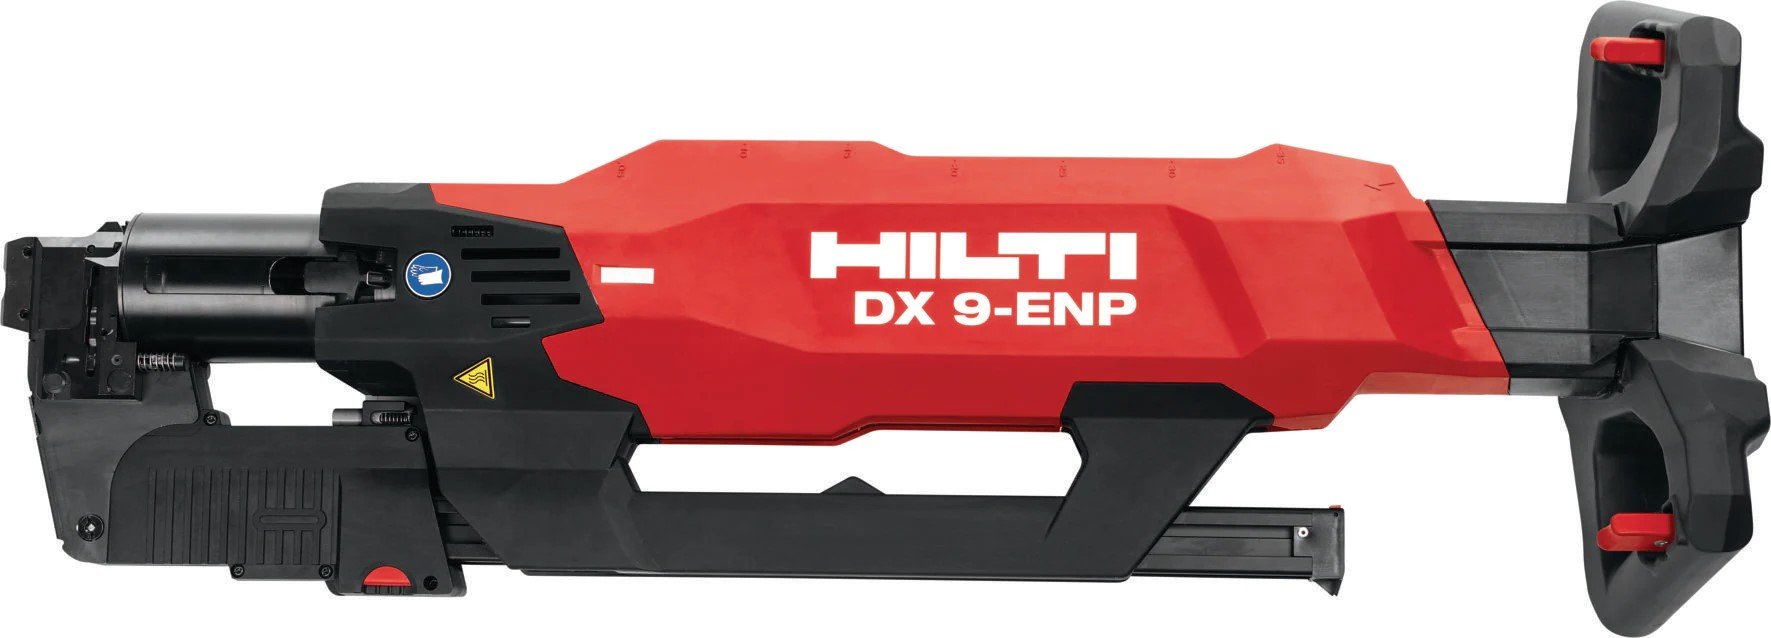 Hilti DX 9-ENP